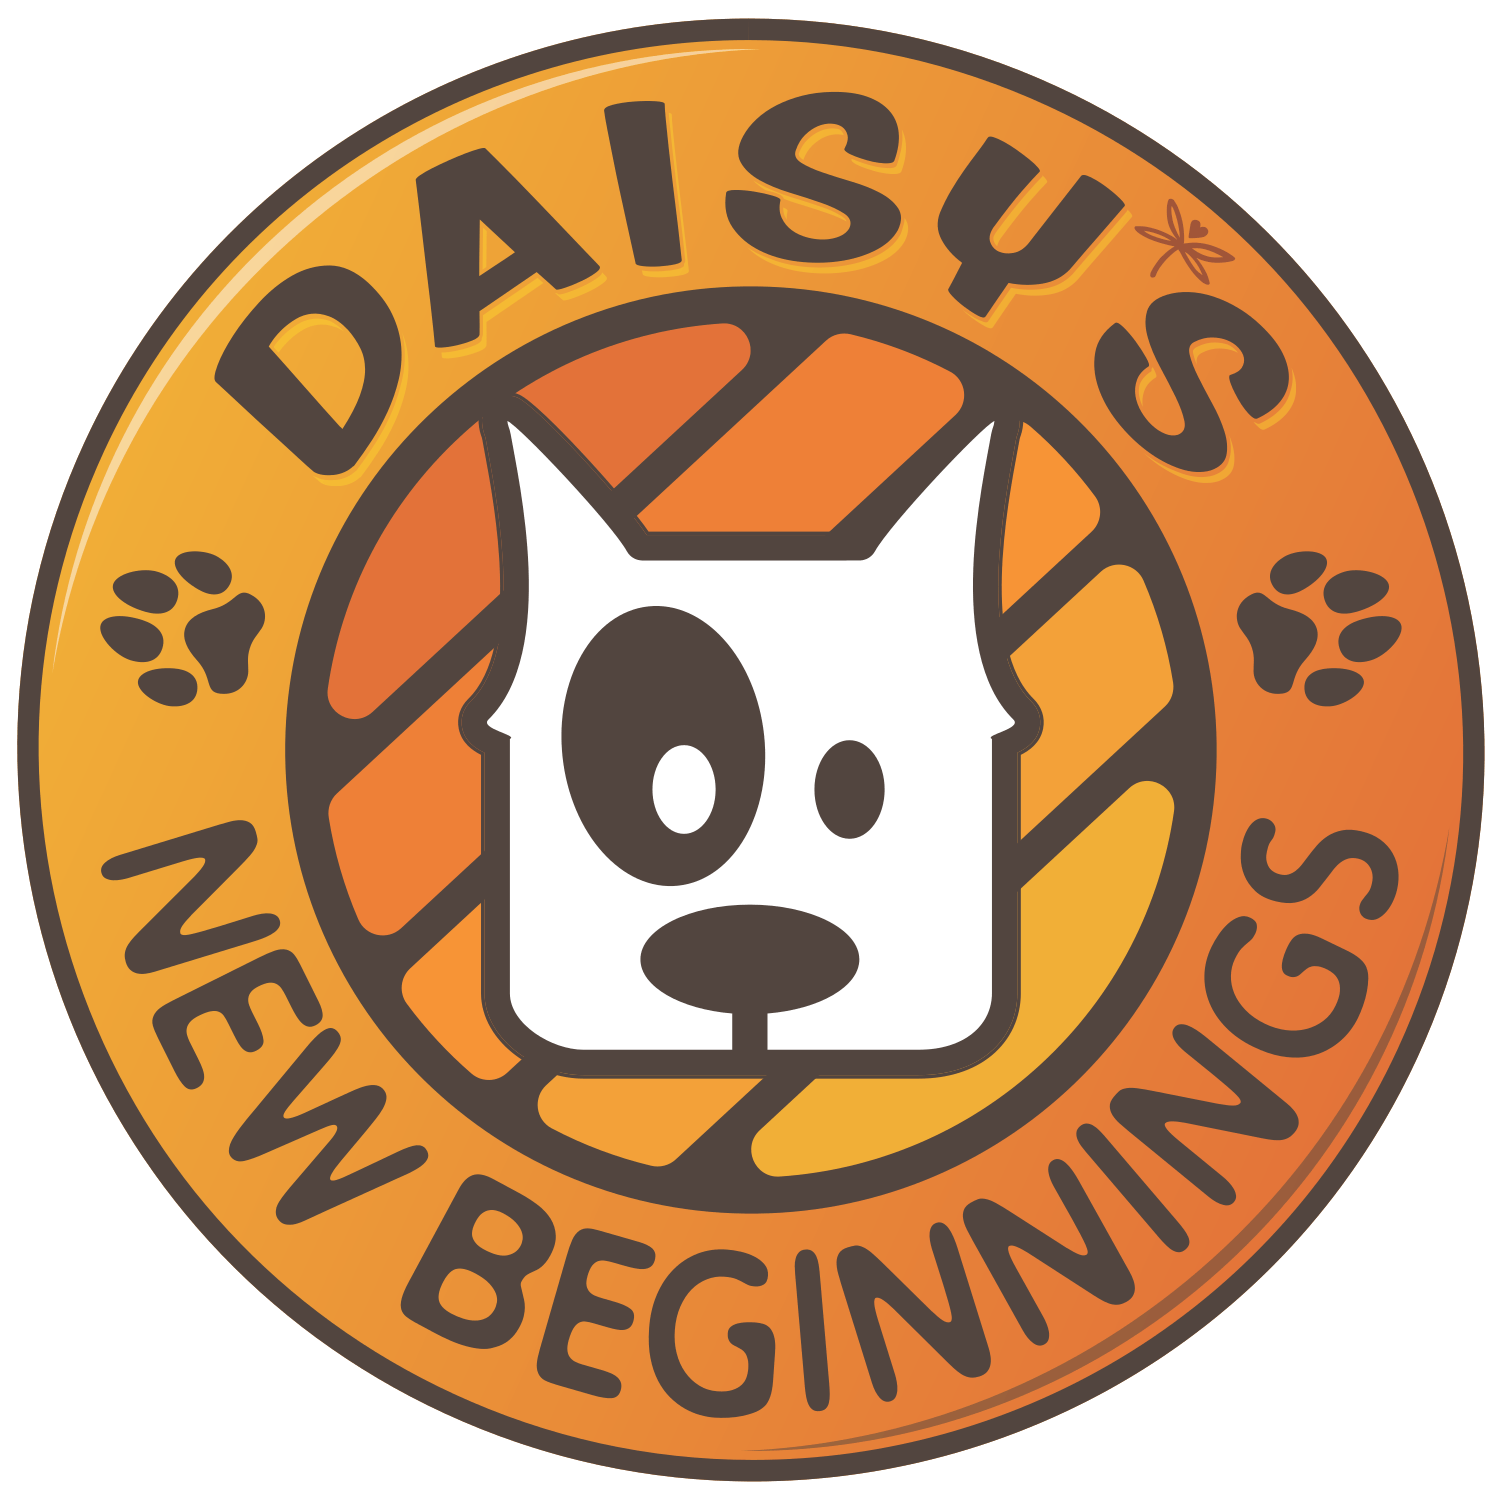 Daisy's New Beginnings